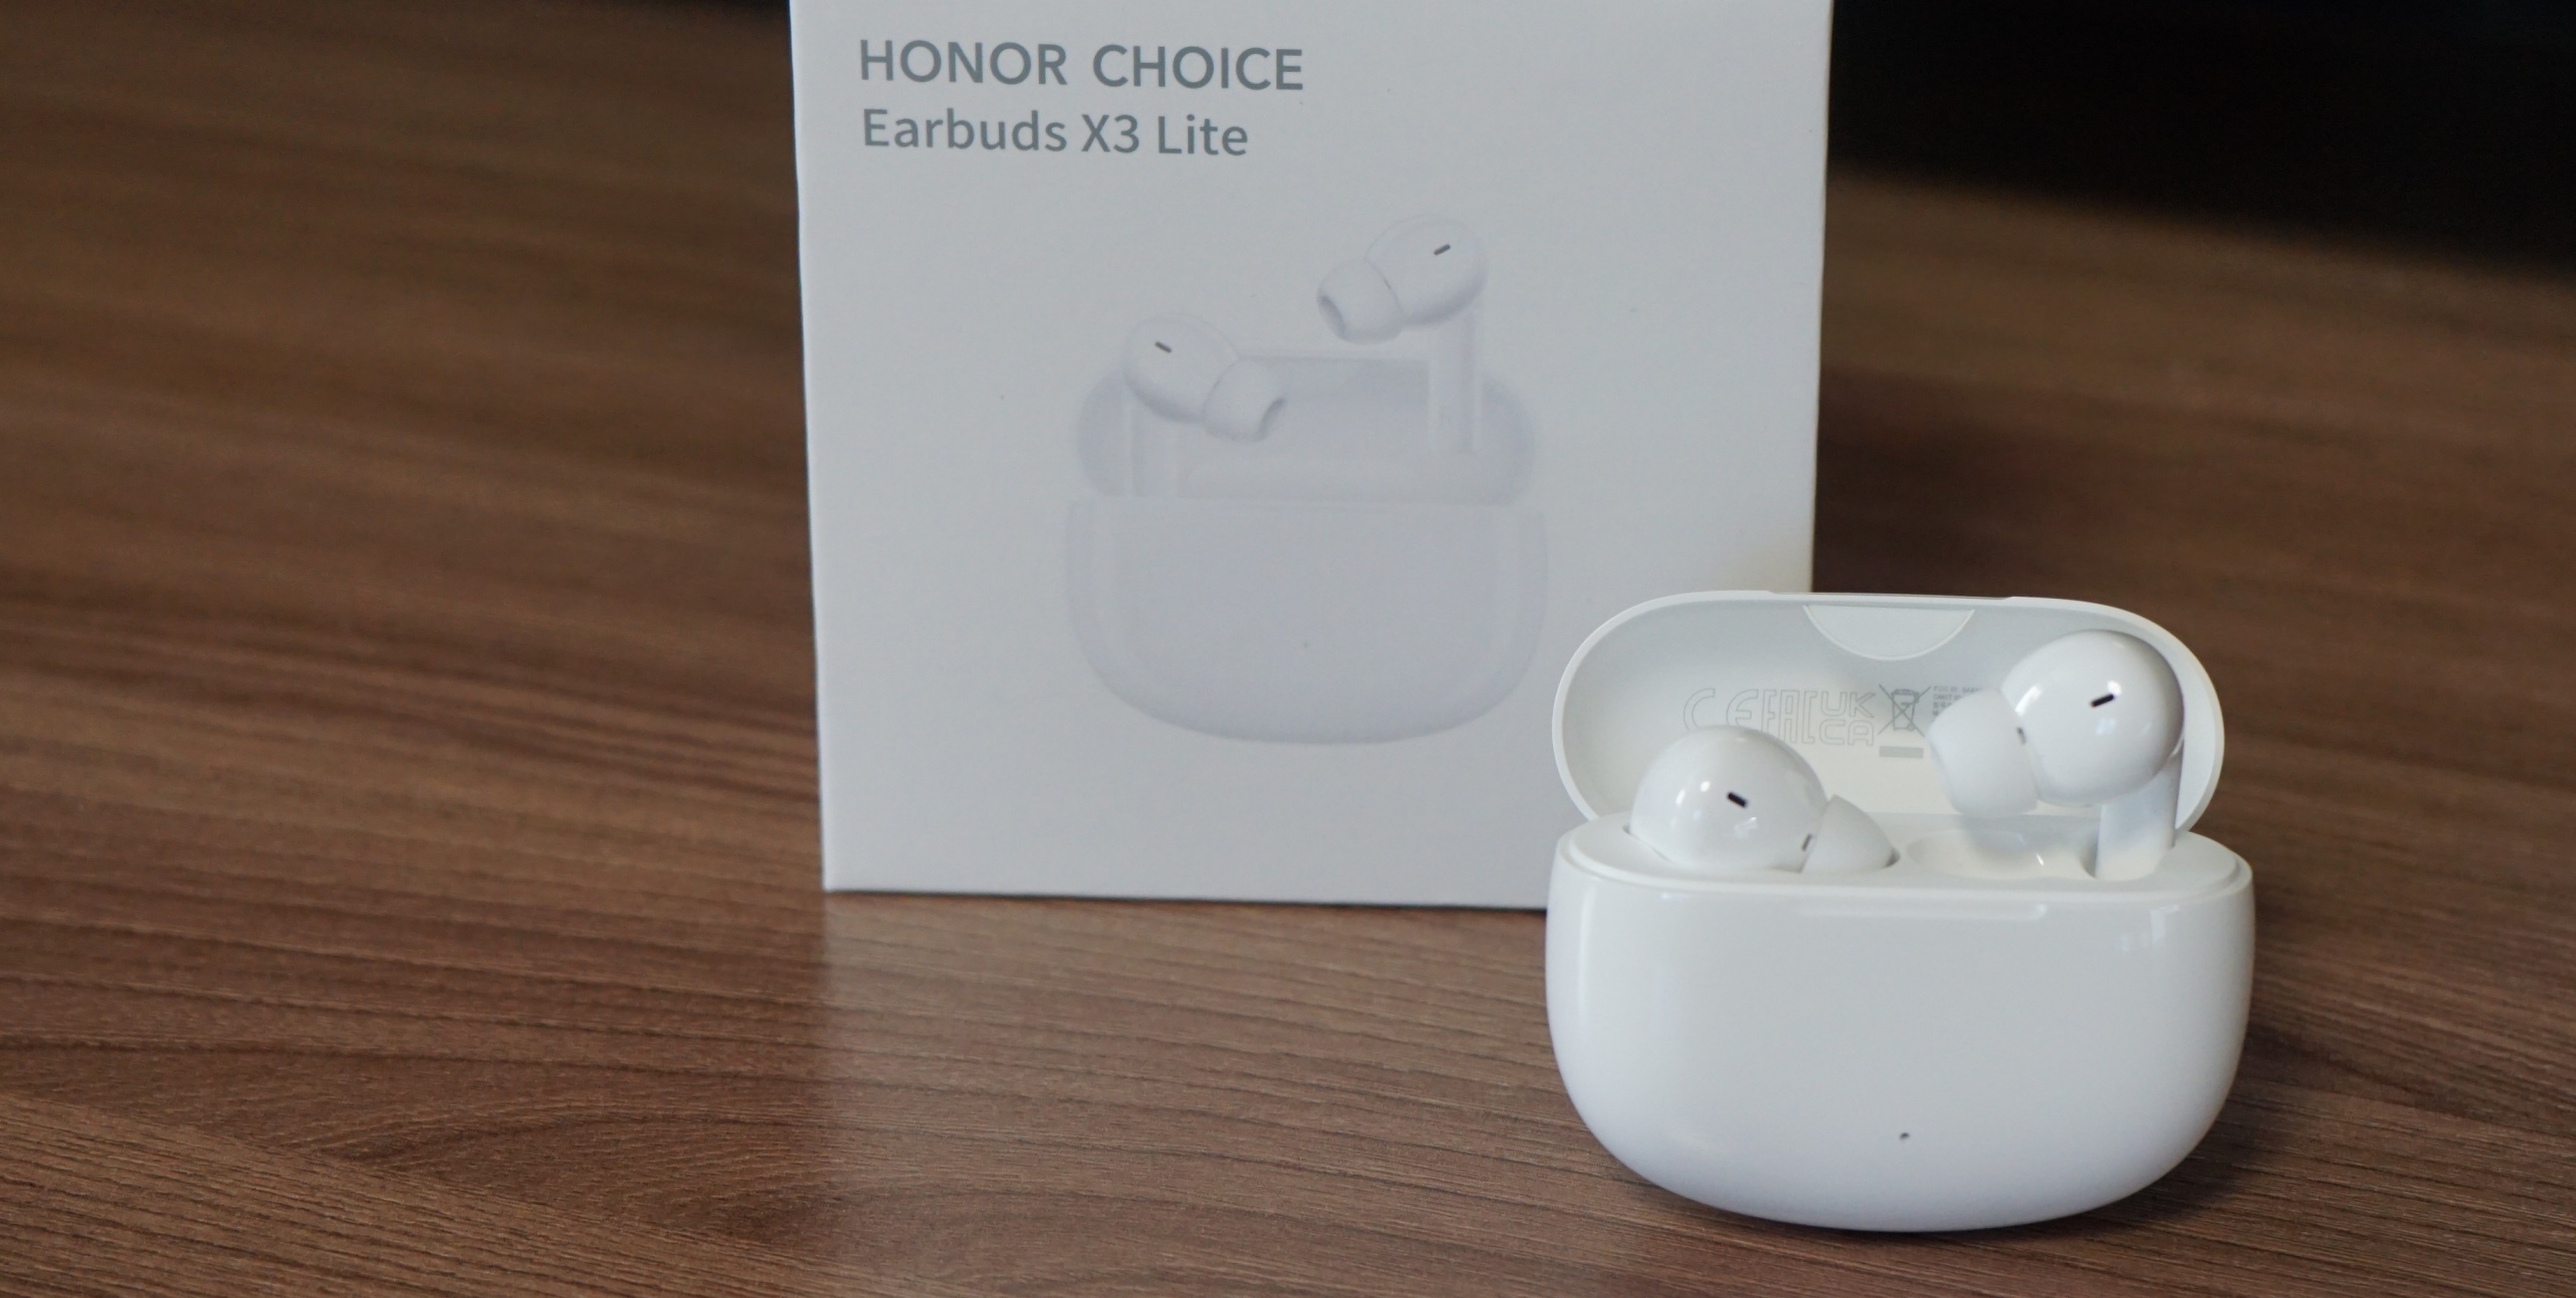 Honor choice x3 купить